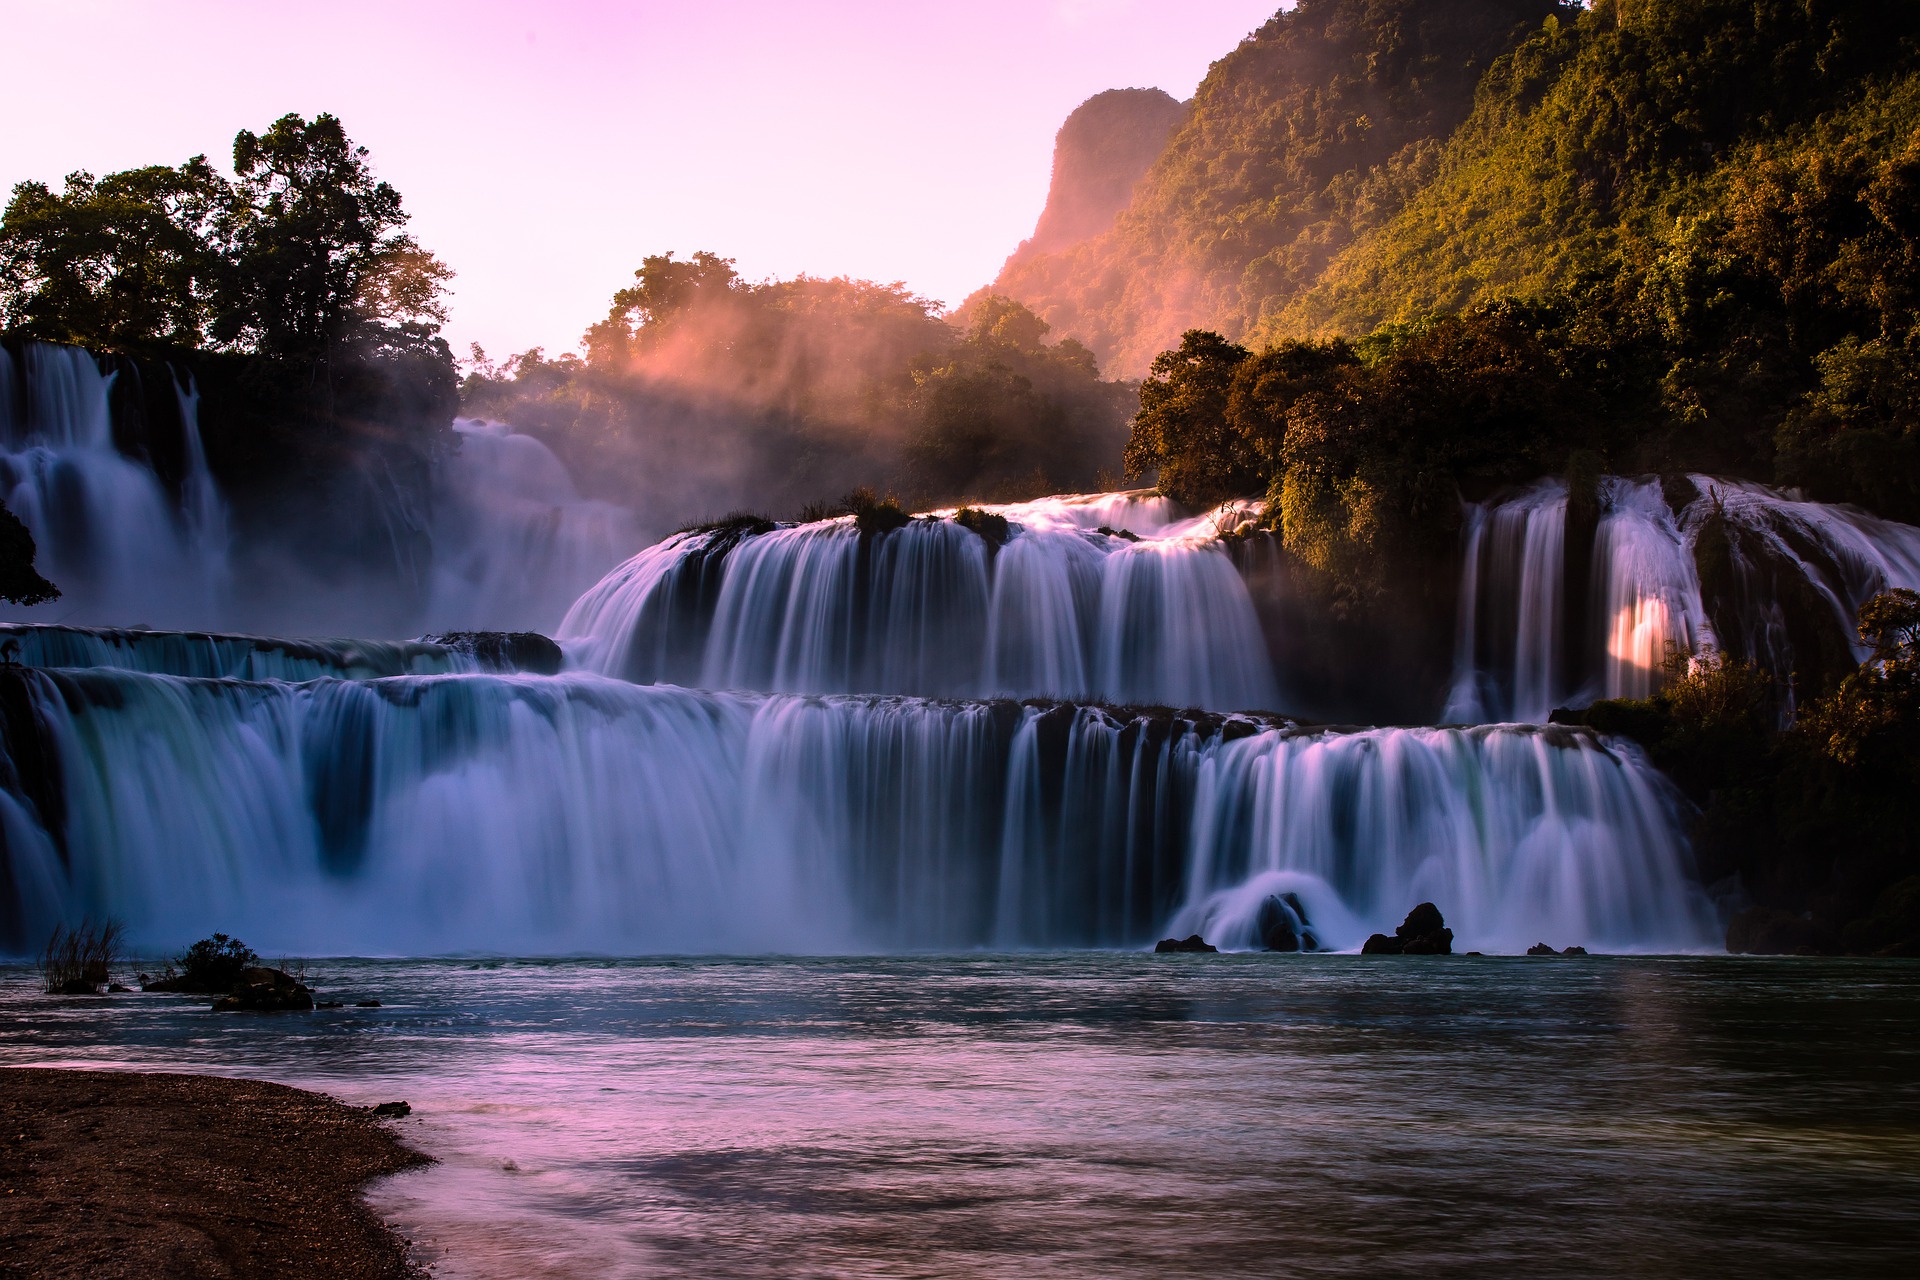 gioc village waterfall - travel to Vietnam and teach TEFL/TESOL